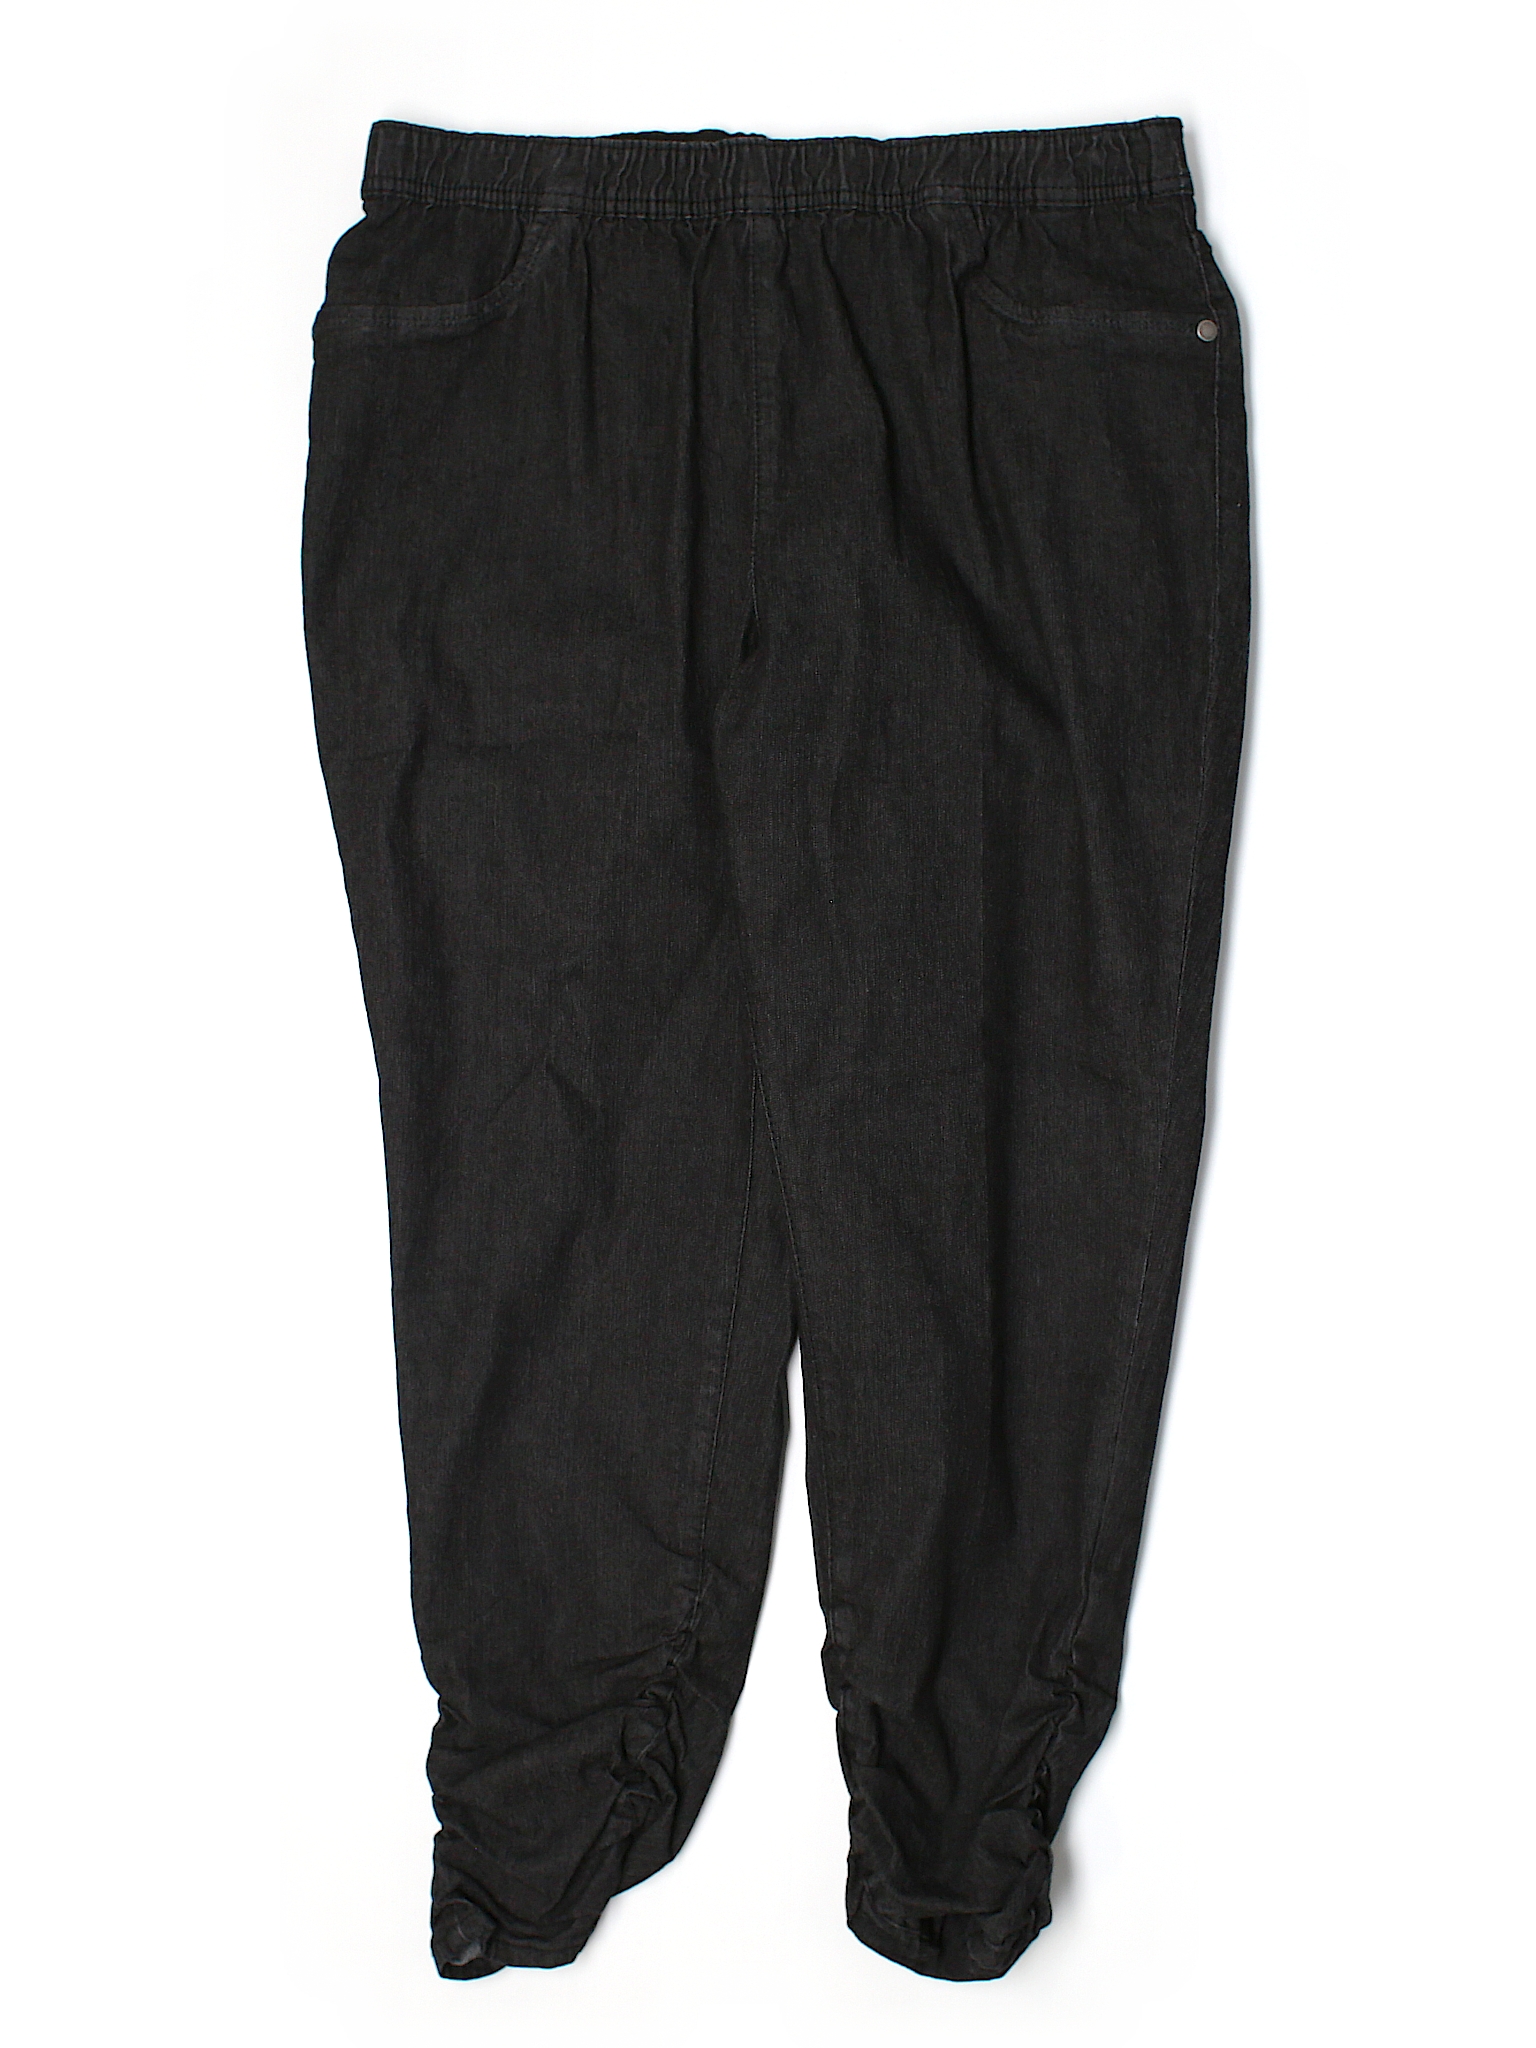 Avenue Solid Black Jeans Size 18 (Plus) - 93% off | thredUP